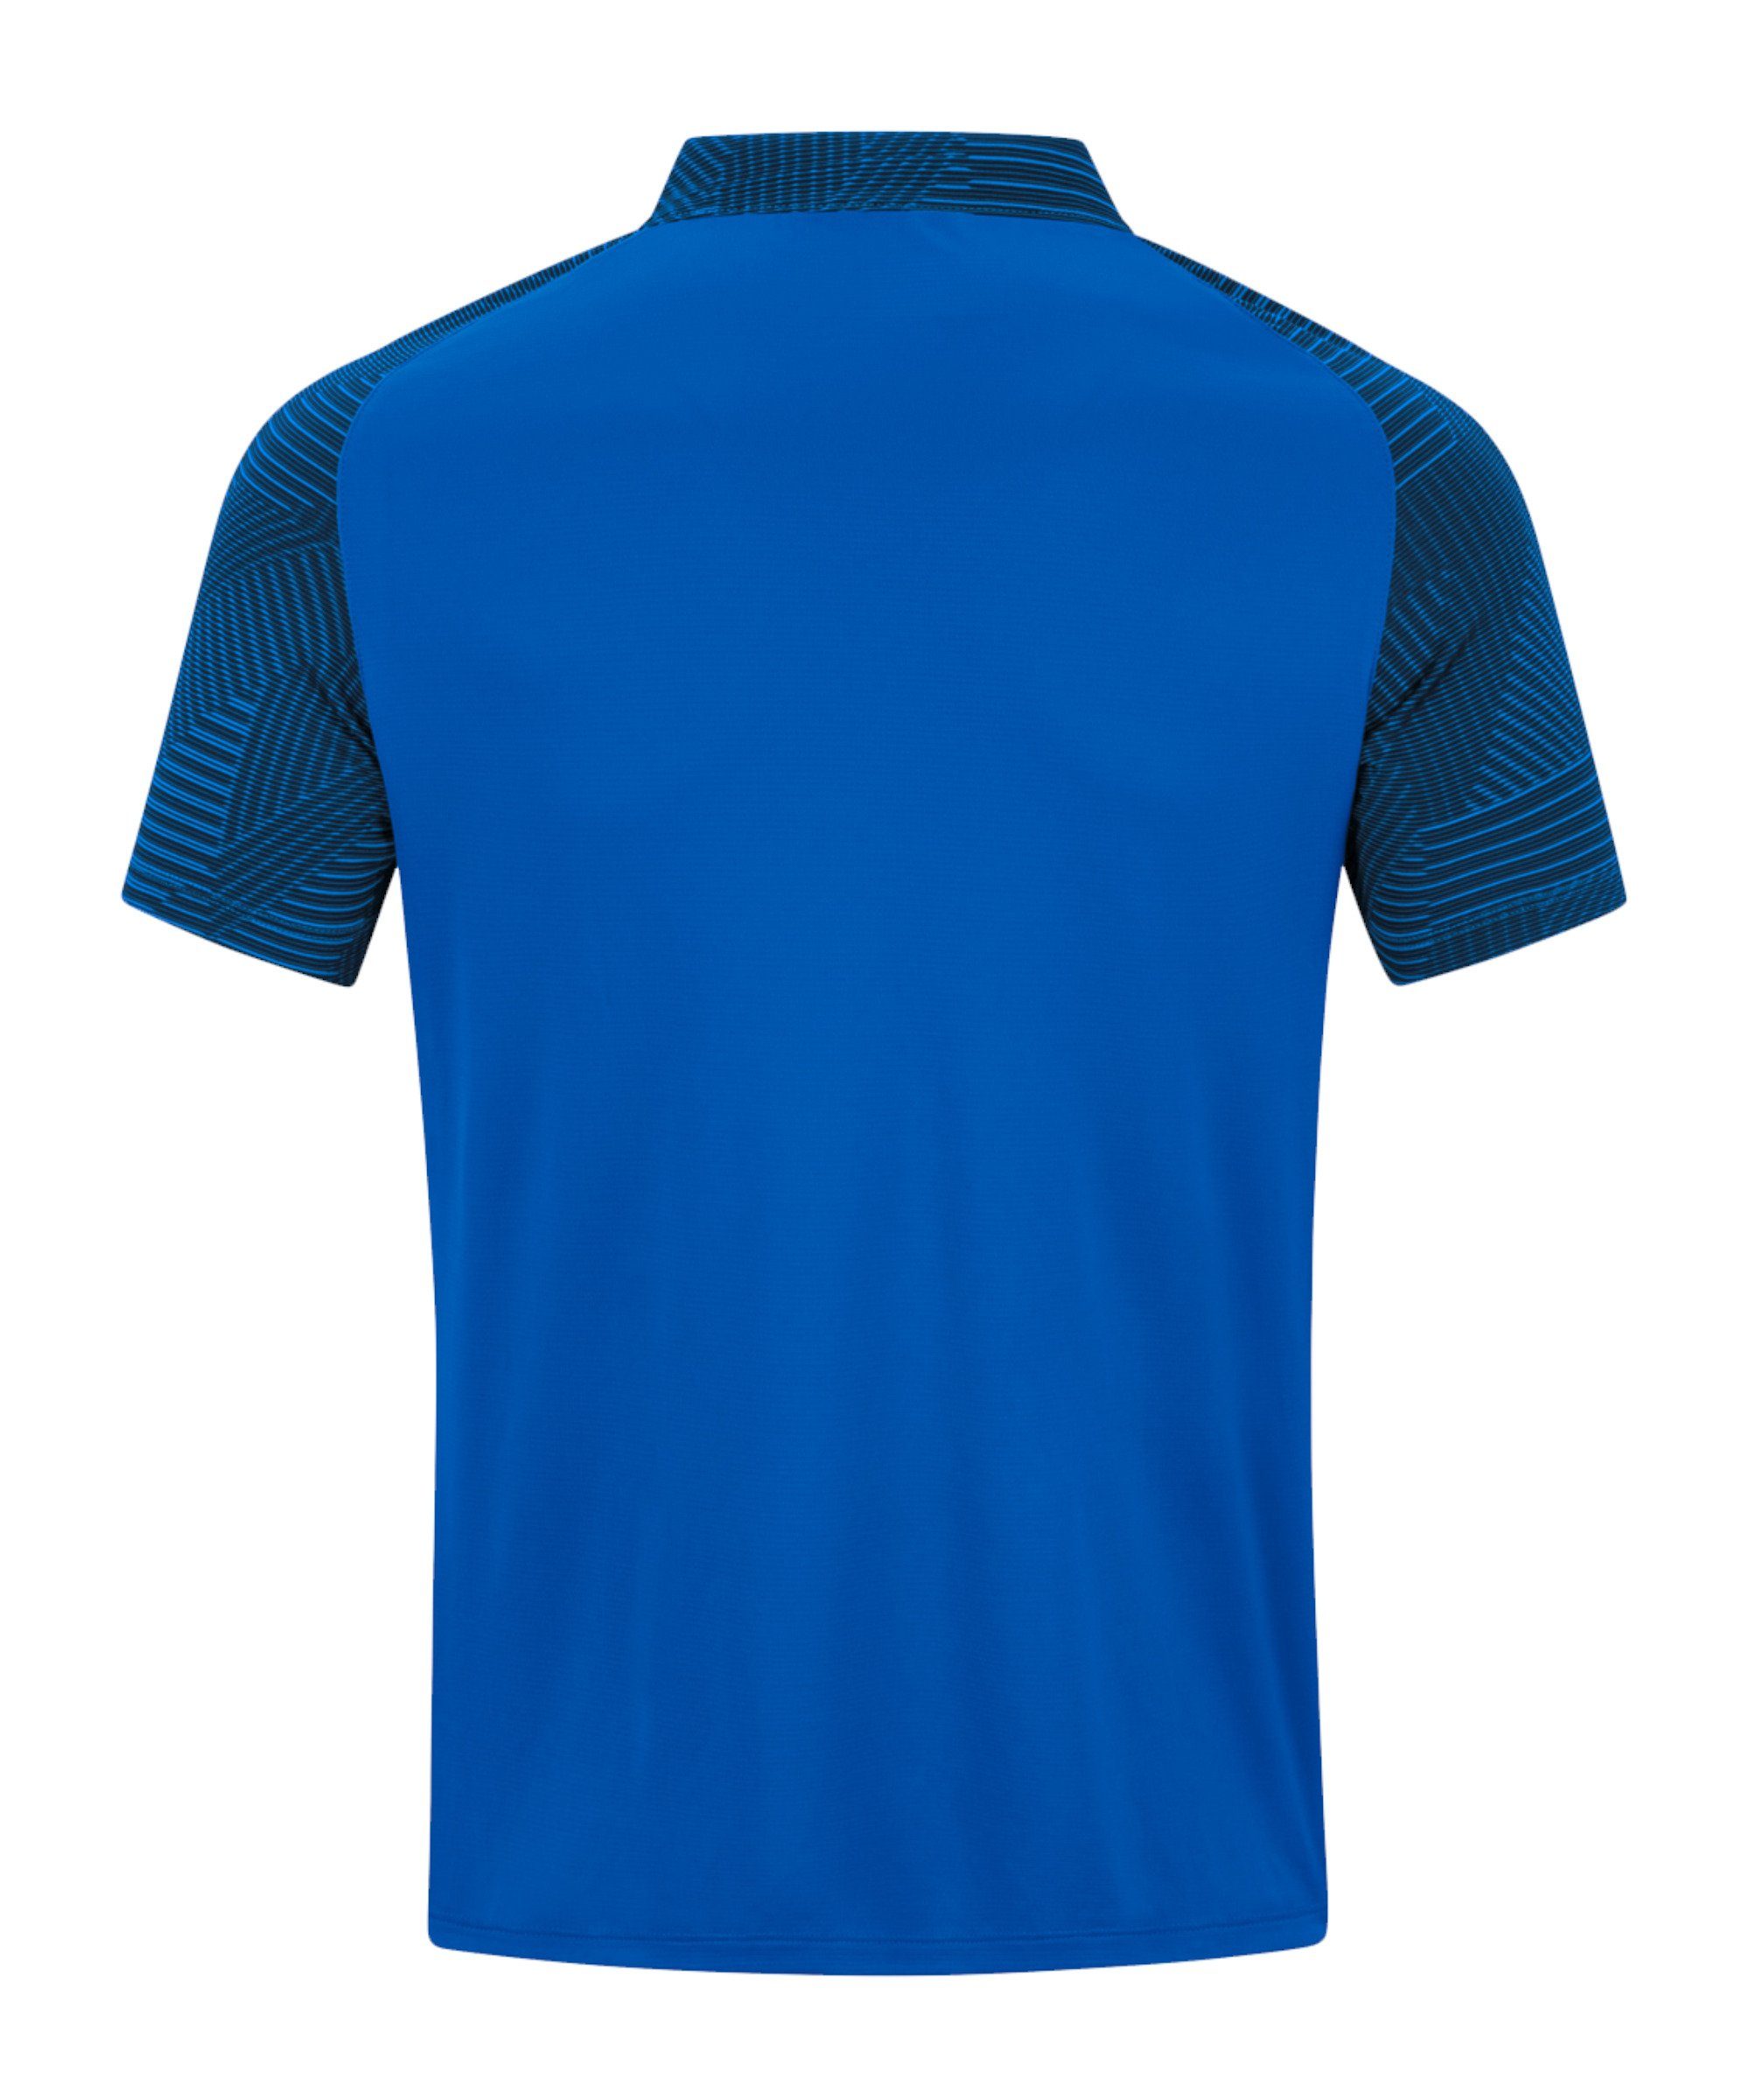 Jako T-Shirt blaublau Poloshirt Performance default